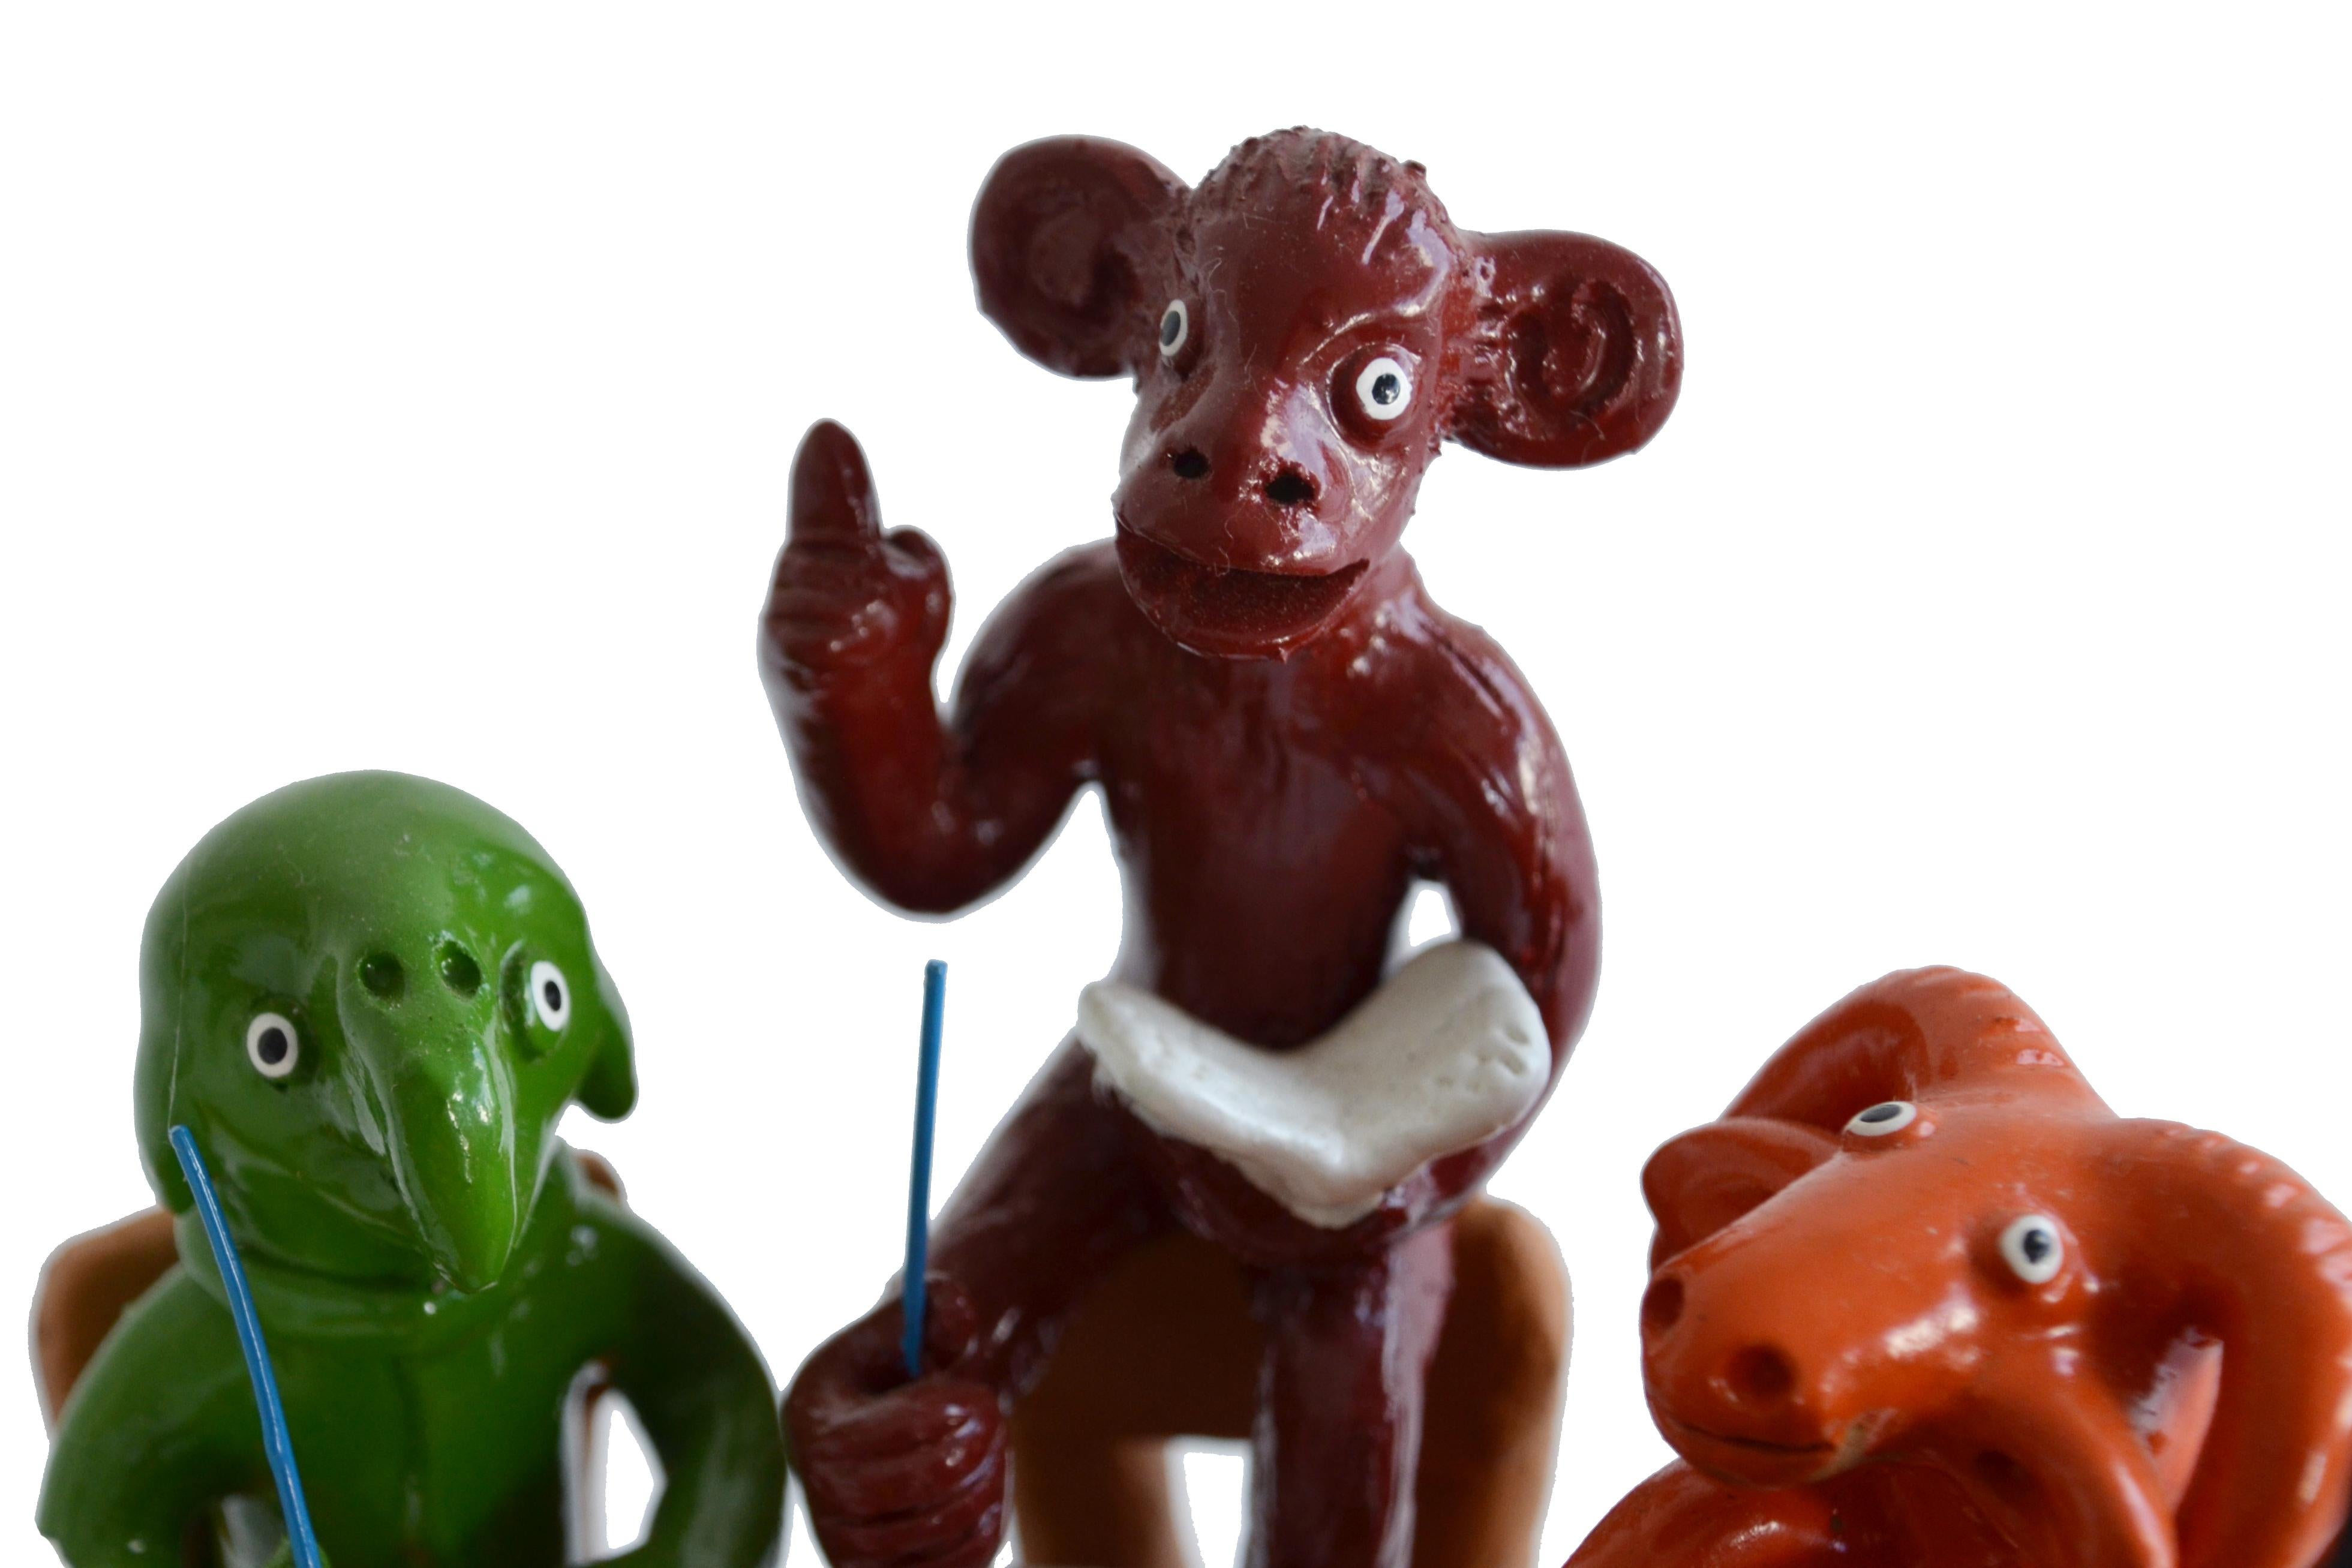 Brazilian Handcrafted Ceramic Sculpture Animal Council In Excellent Condition For Sale In Rio de Janeiro, RJ